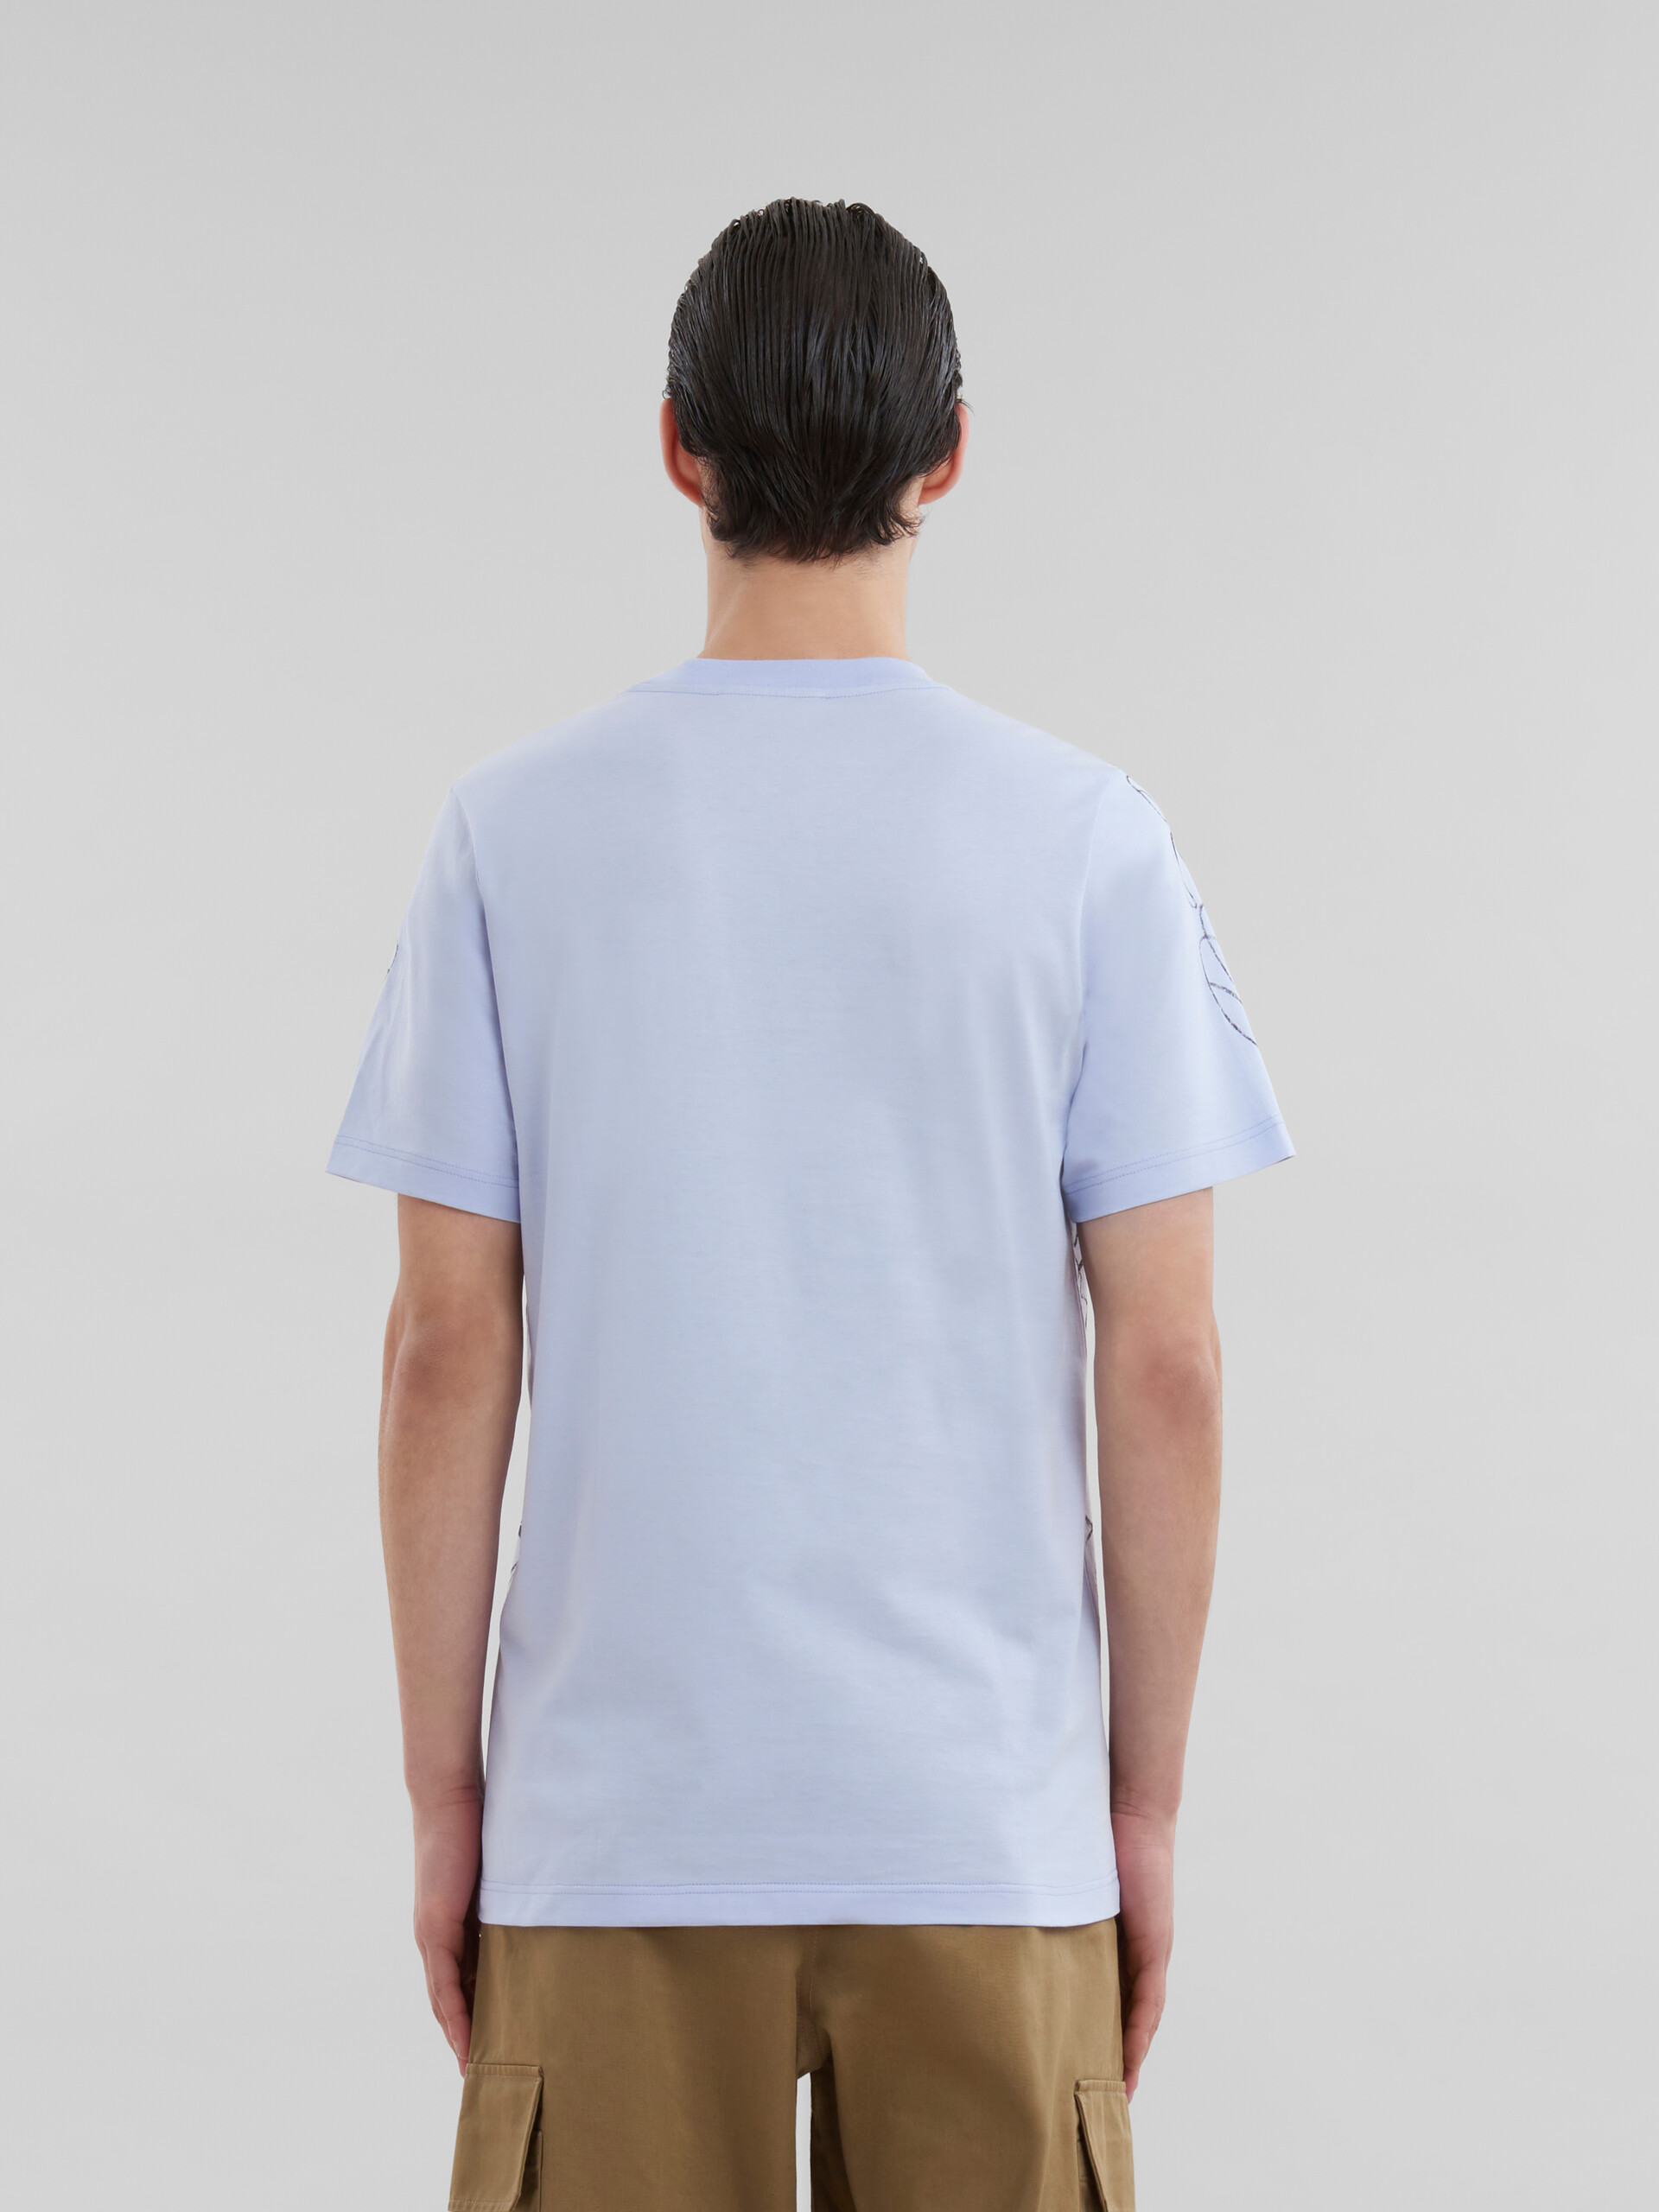 T-shirt in cotone biologico blu con motivo Scribble Marni - T-shirt - Image 3